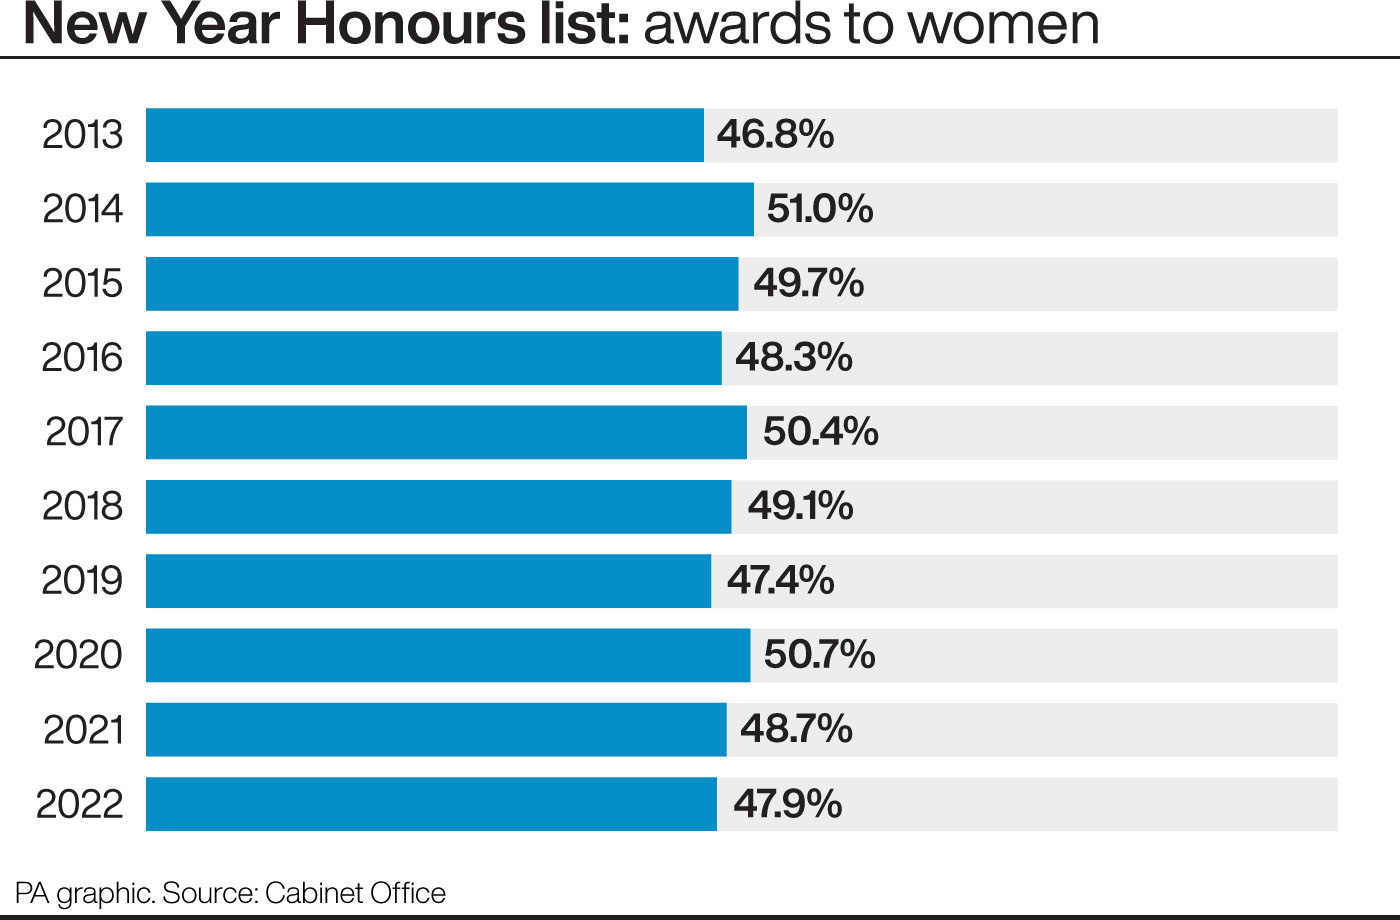 Honours awarded to women